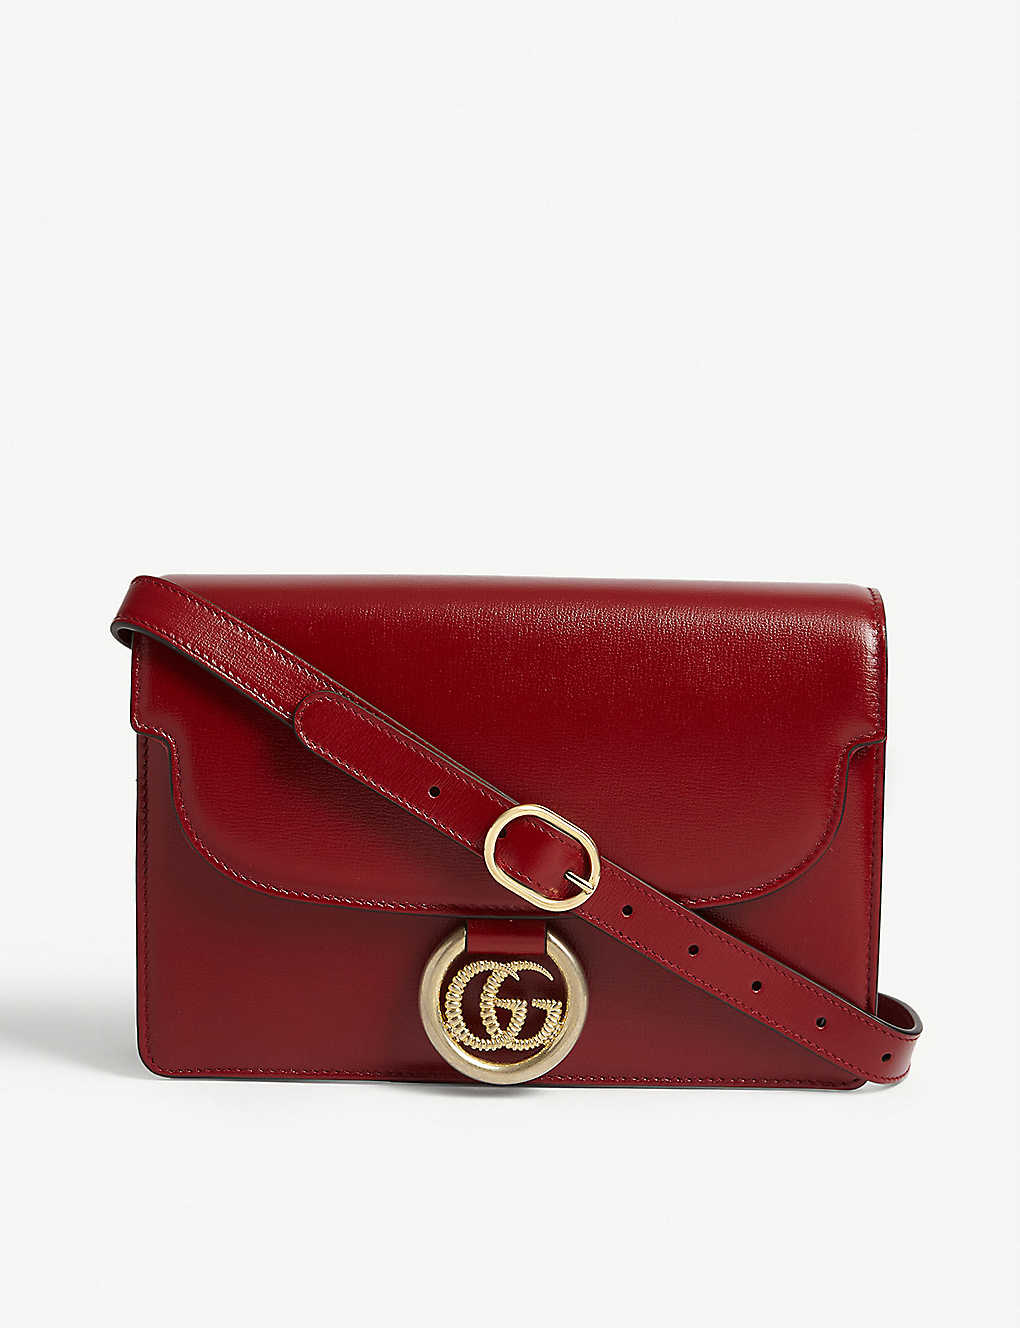 GUCCI: GG logo leather crossbody bag